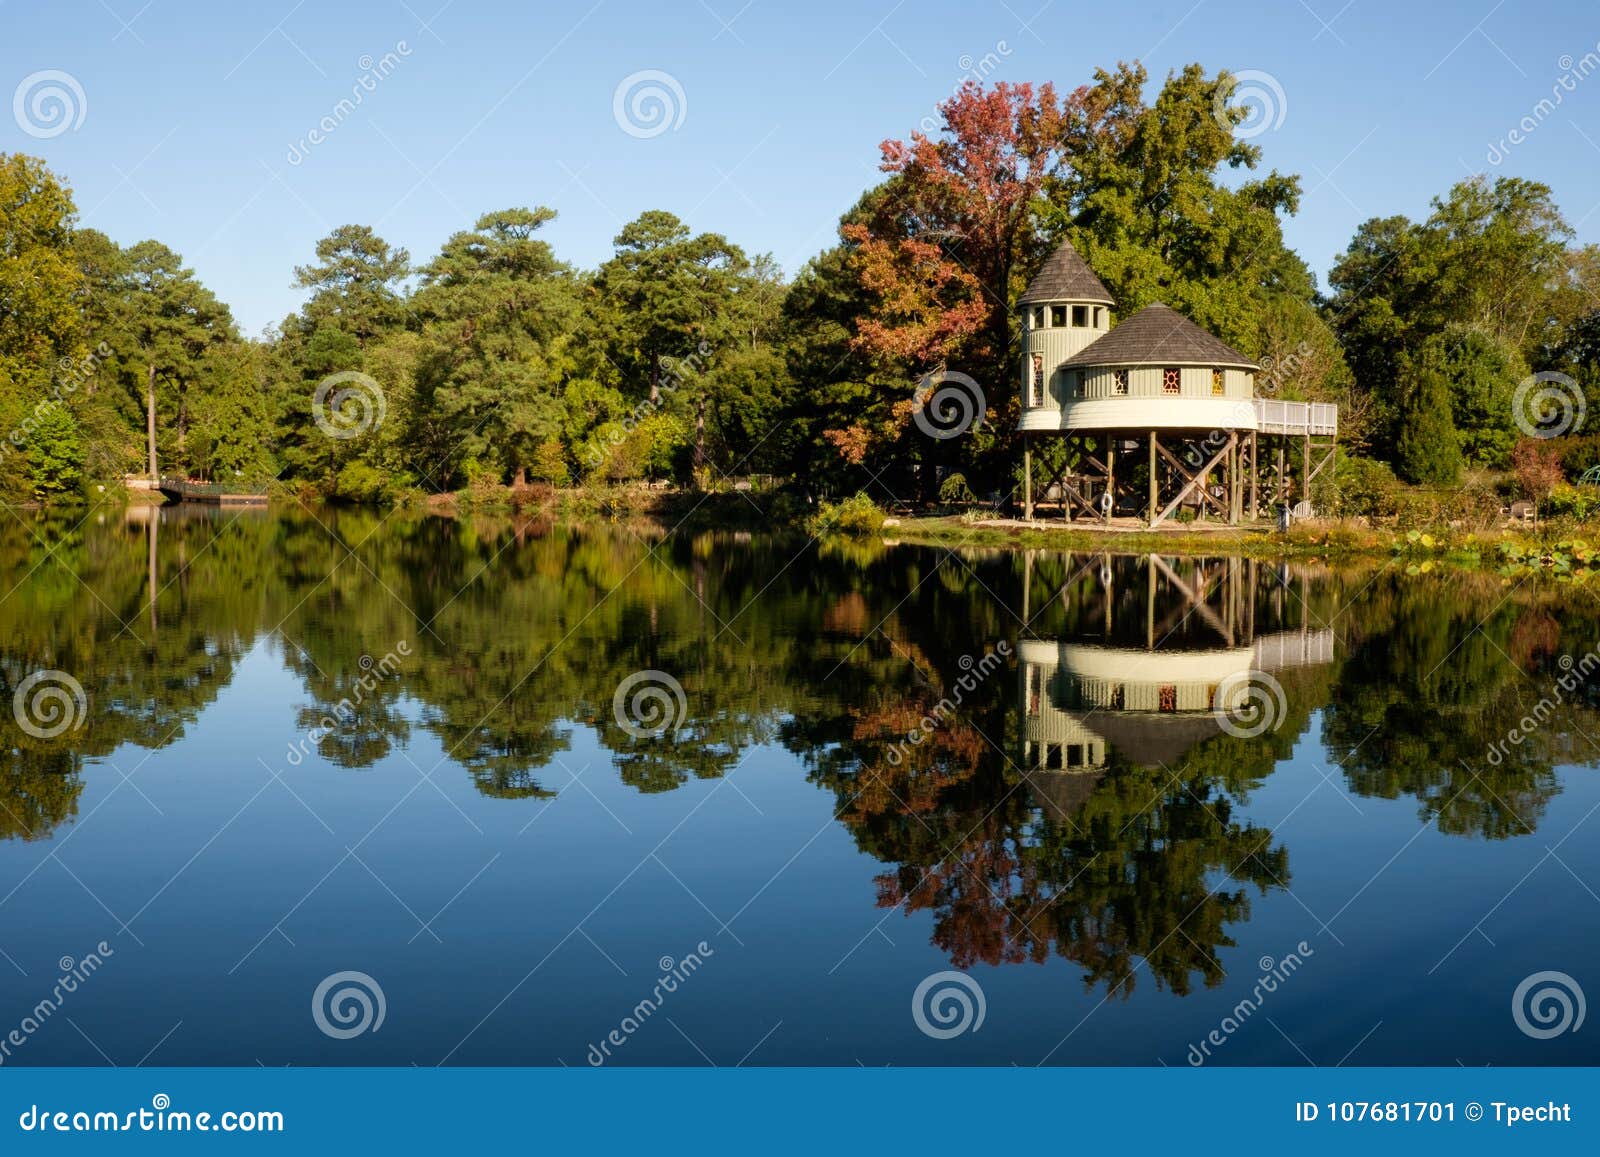 tree house on the lake